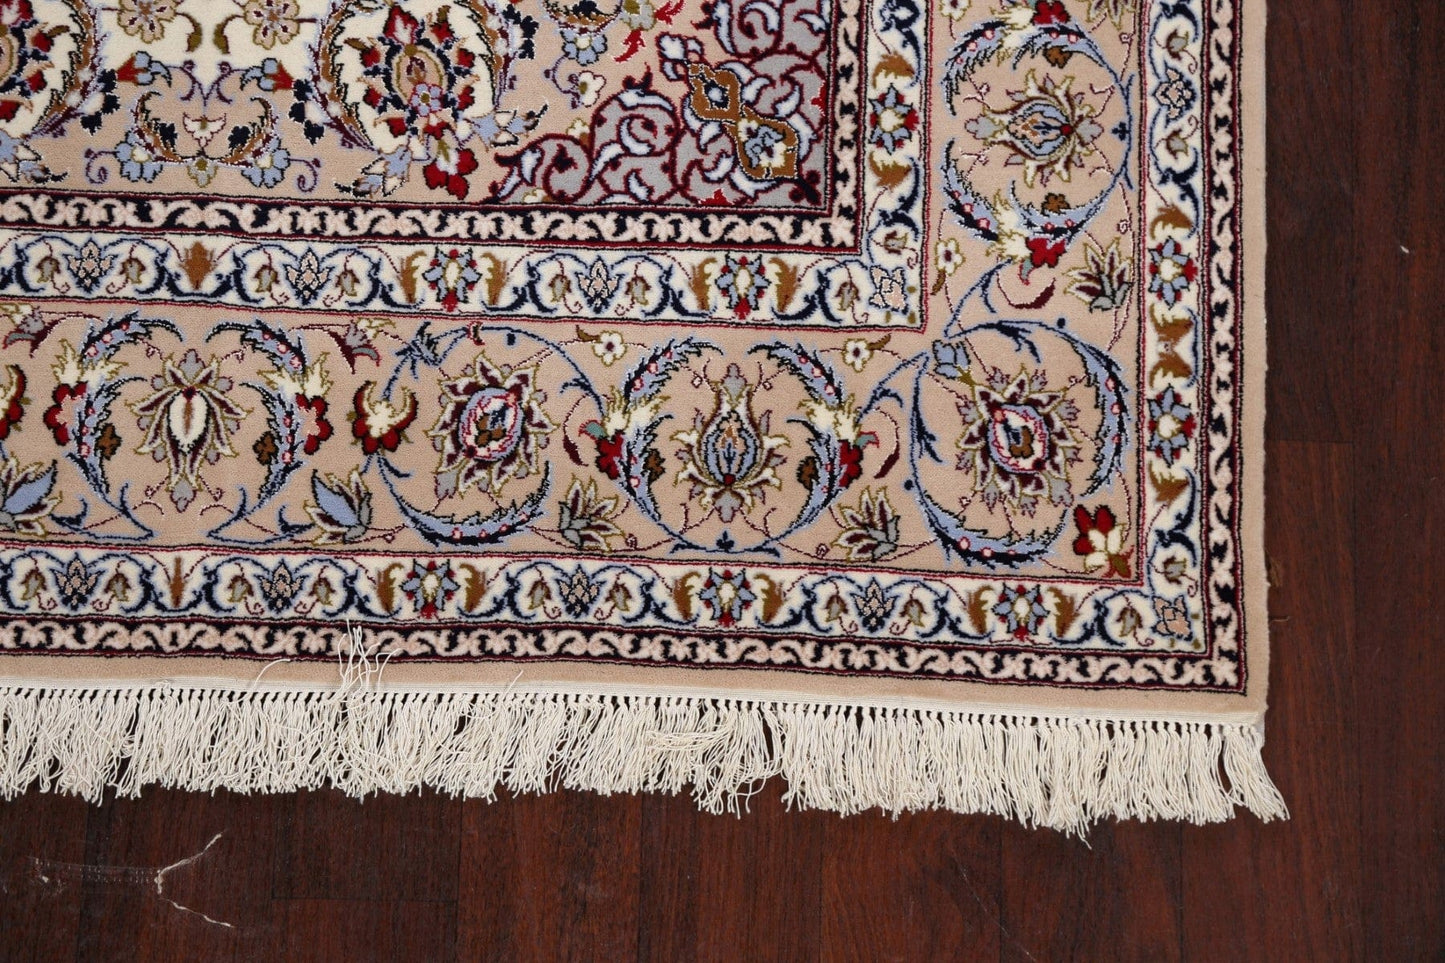 Vegetable Dye Wool/ Silk Floral Isfahan Persian Area Rug 5x8